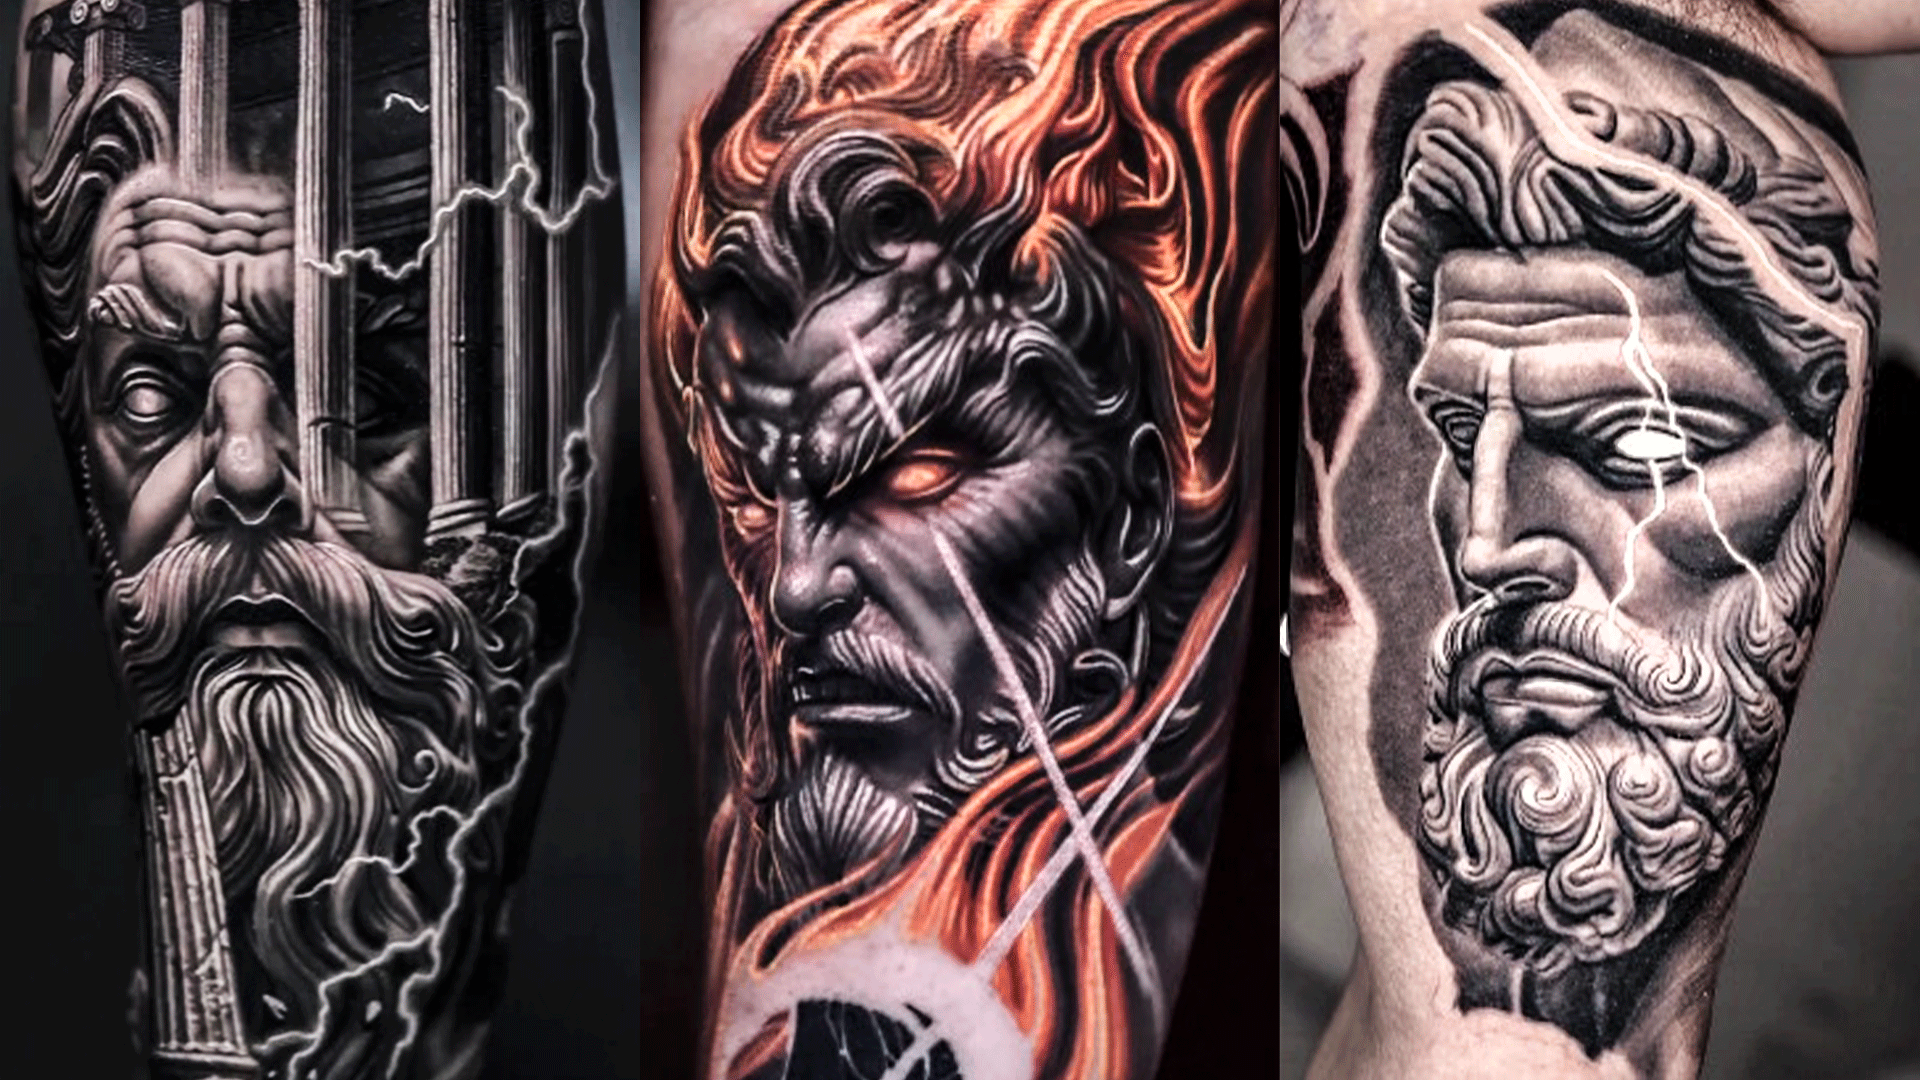 Greek Mythology Tattoos - Get your epic tattoo design HERE online